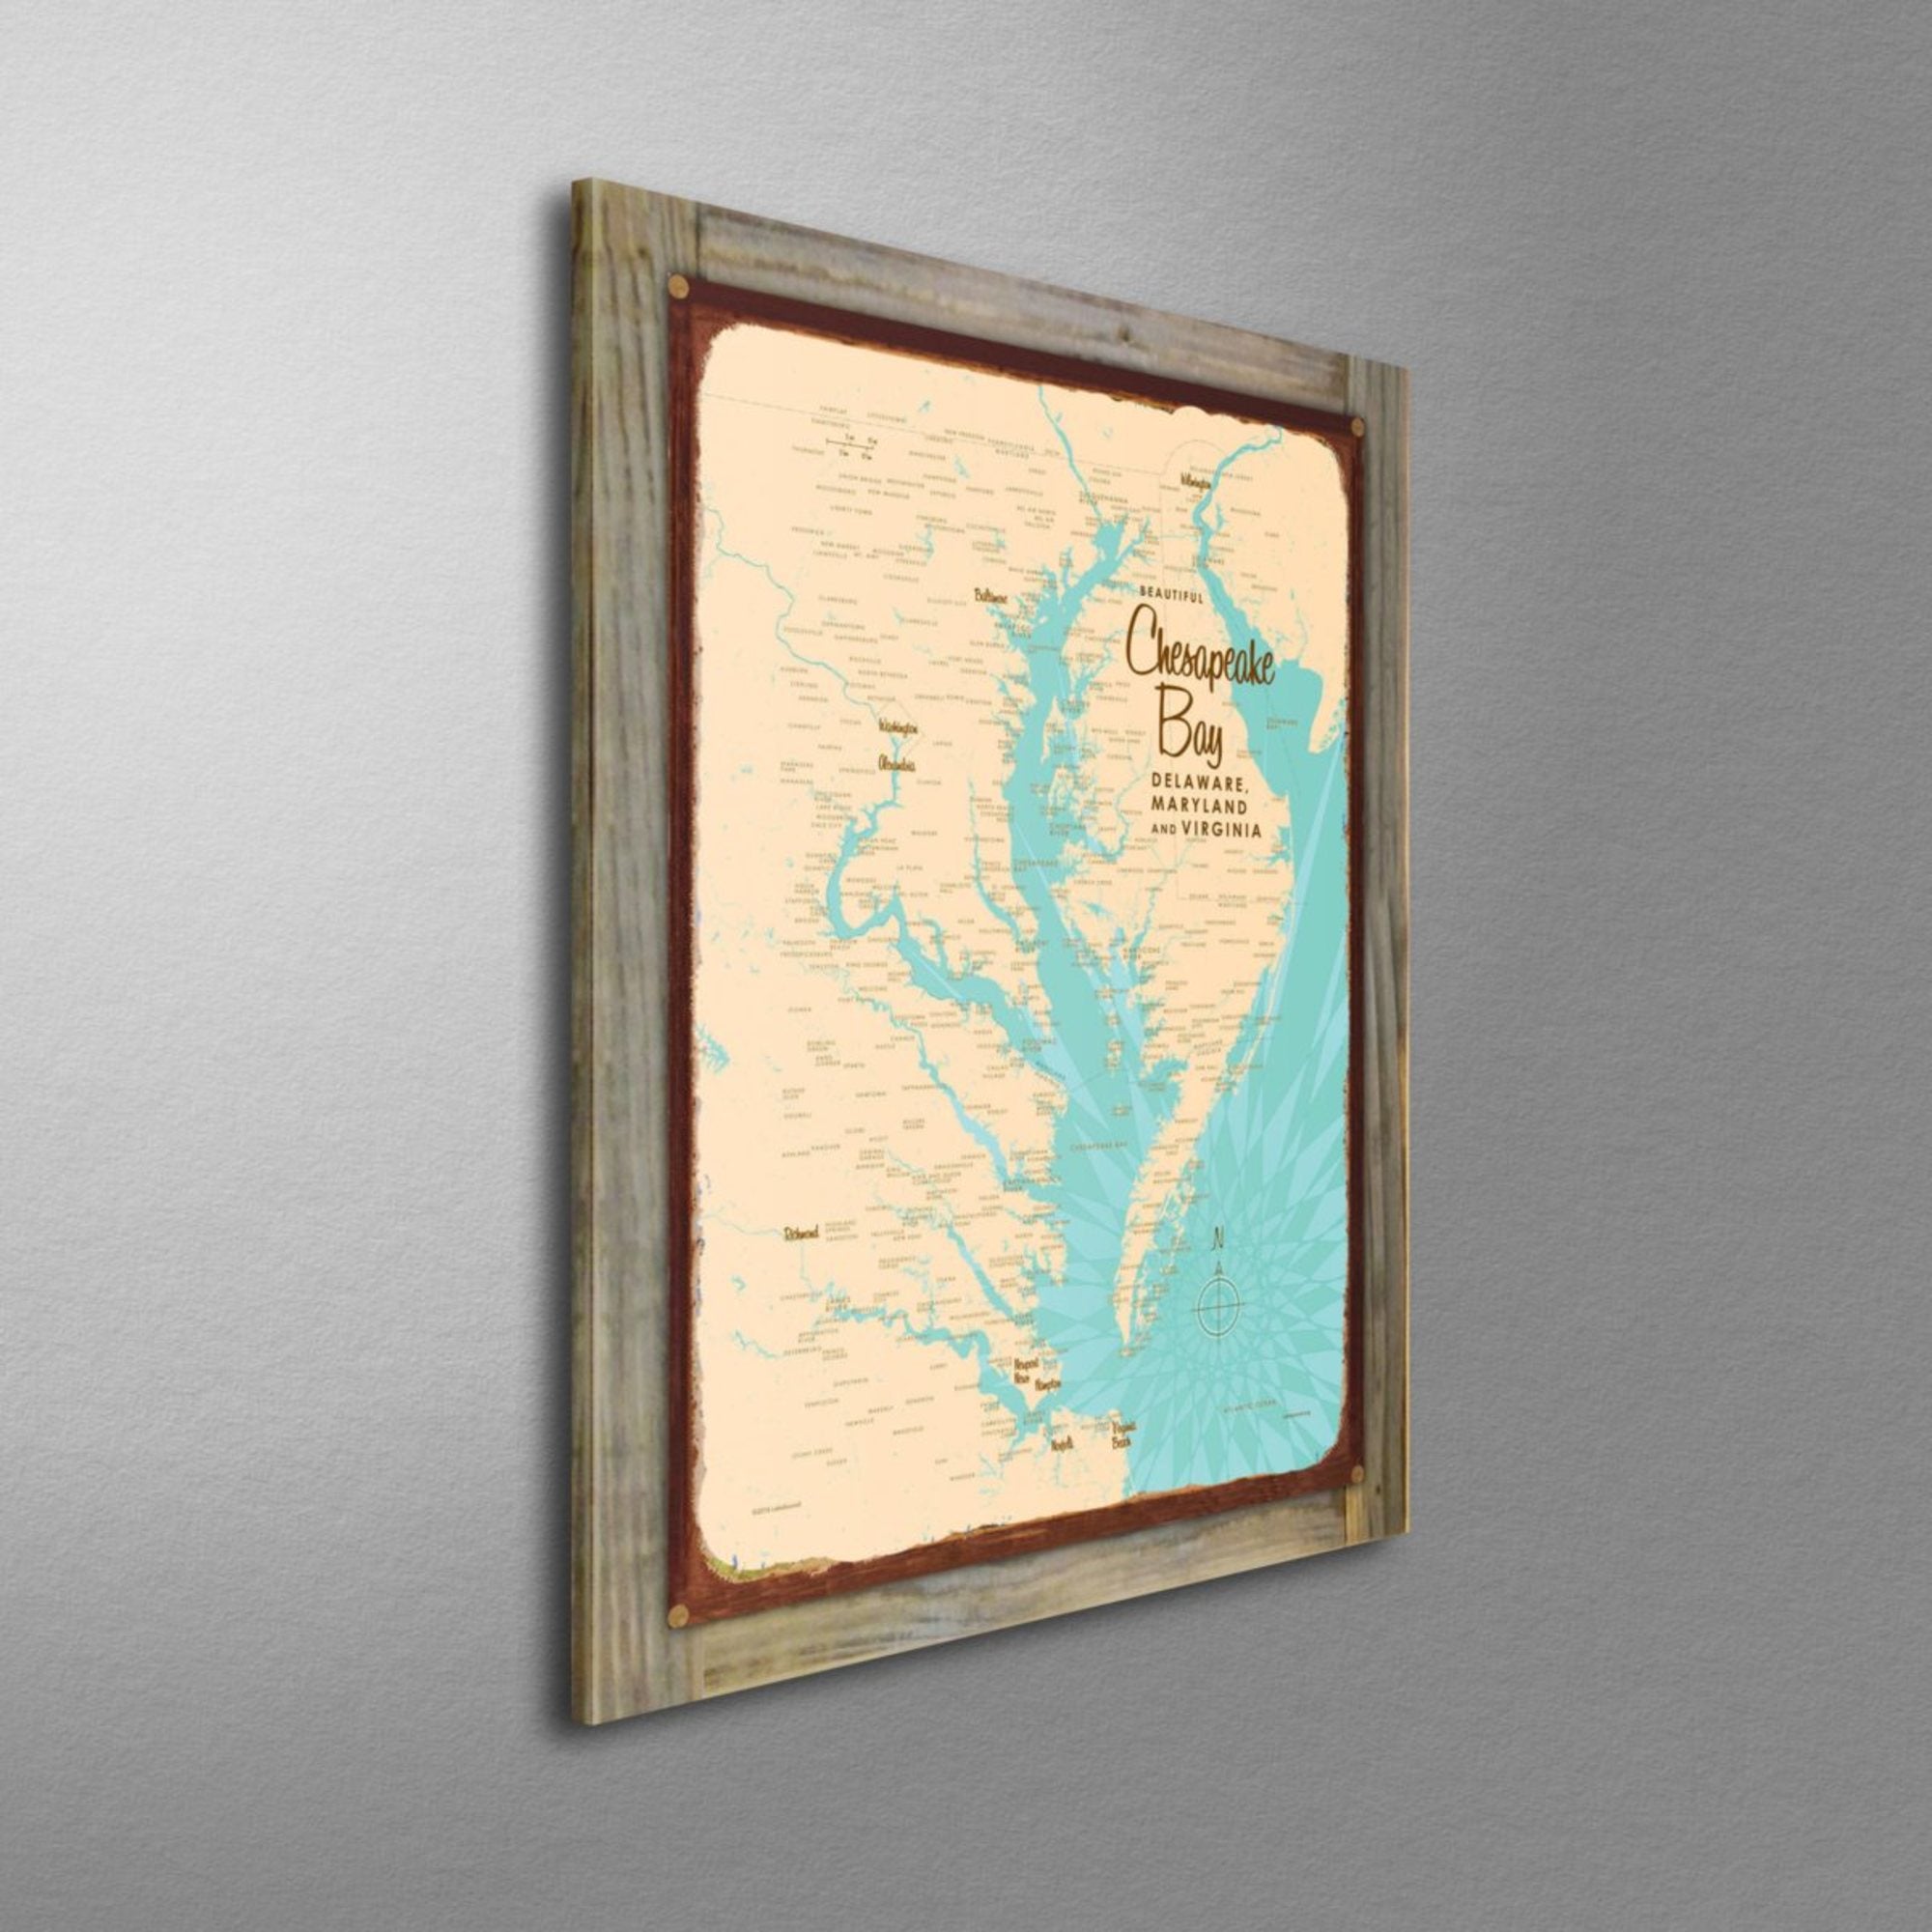 Chesapeake Bay Maryland Virginia, Wood-Mounted Rustic Metal Sign Map Art